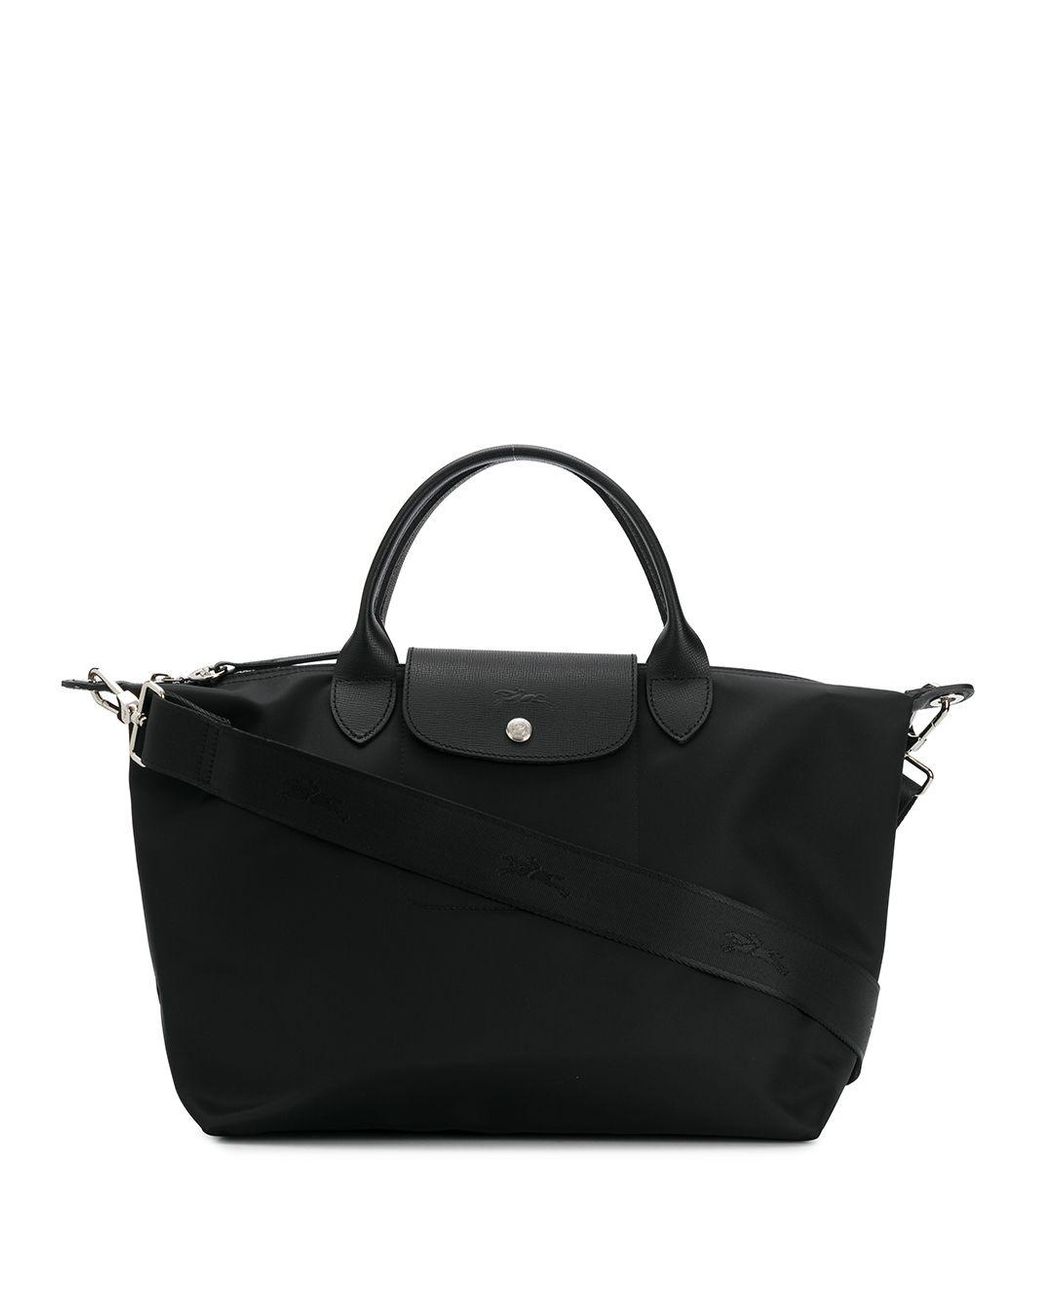 Longchamp Medium Le Pliage Néo Top Handle Bag in Black | Lyst Canada